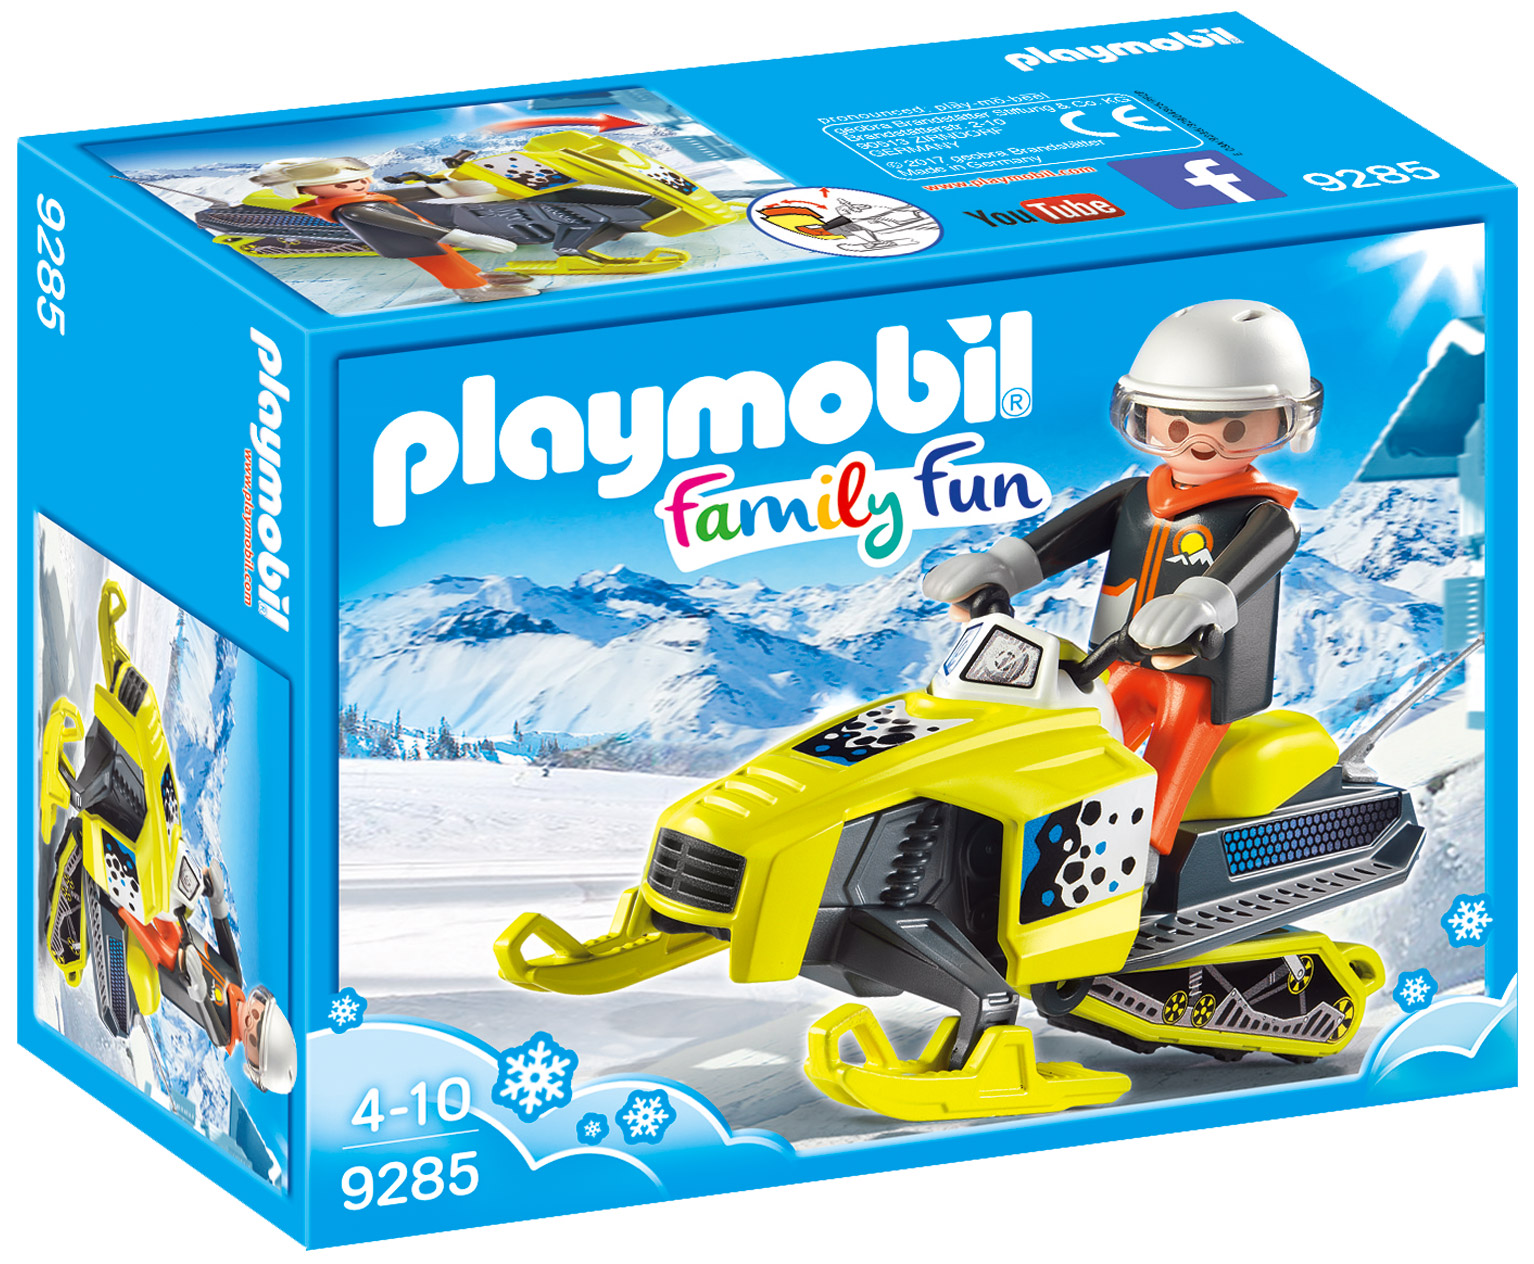 Playmobil - Famille avec voiture et caravane - Playmobil - Rue du Commerce